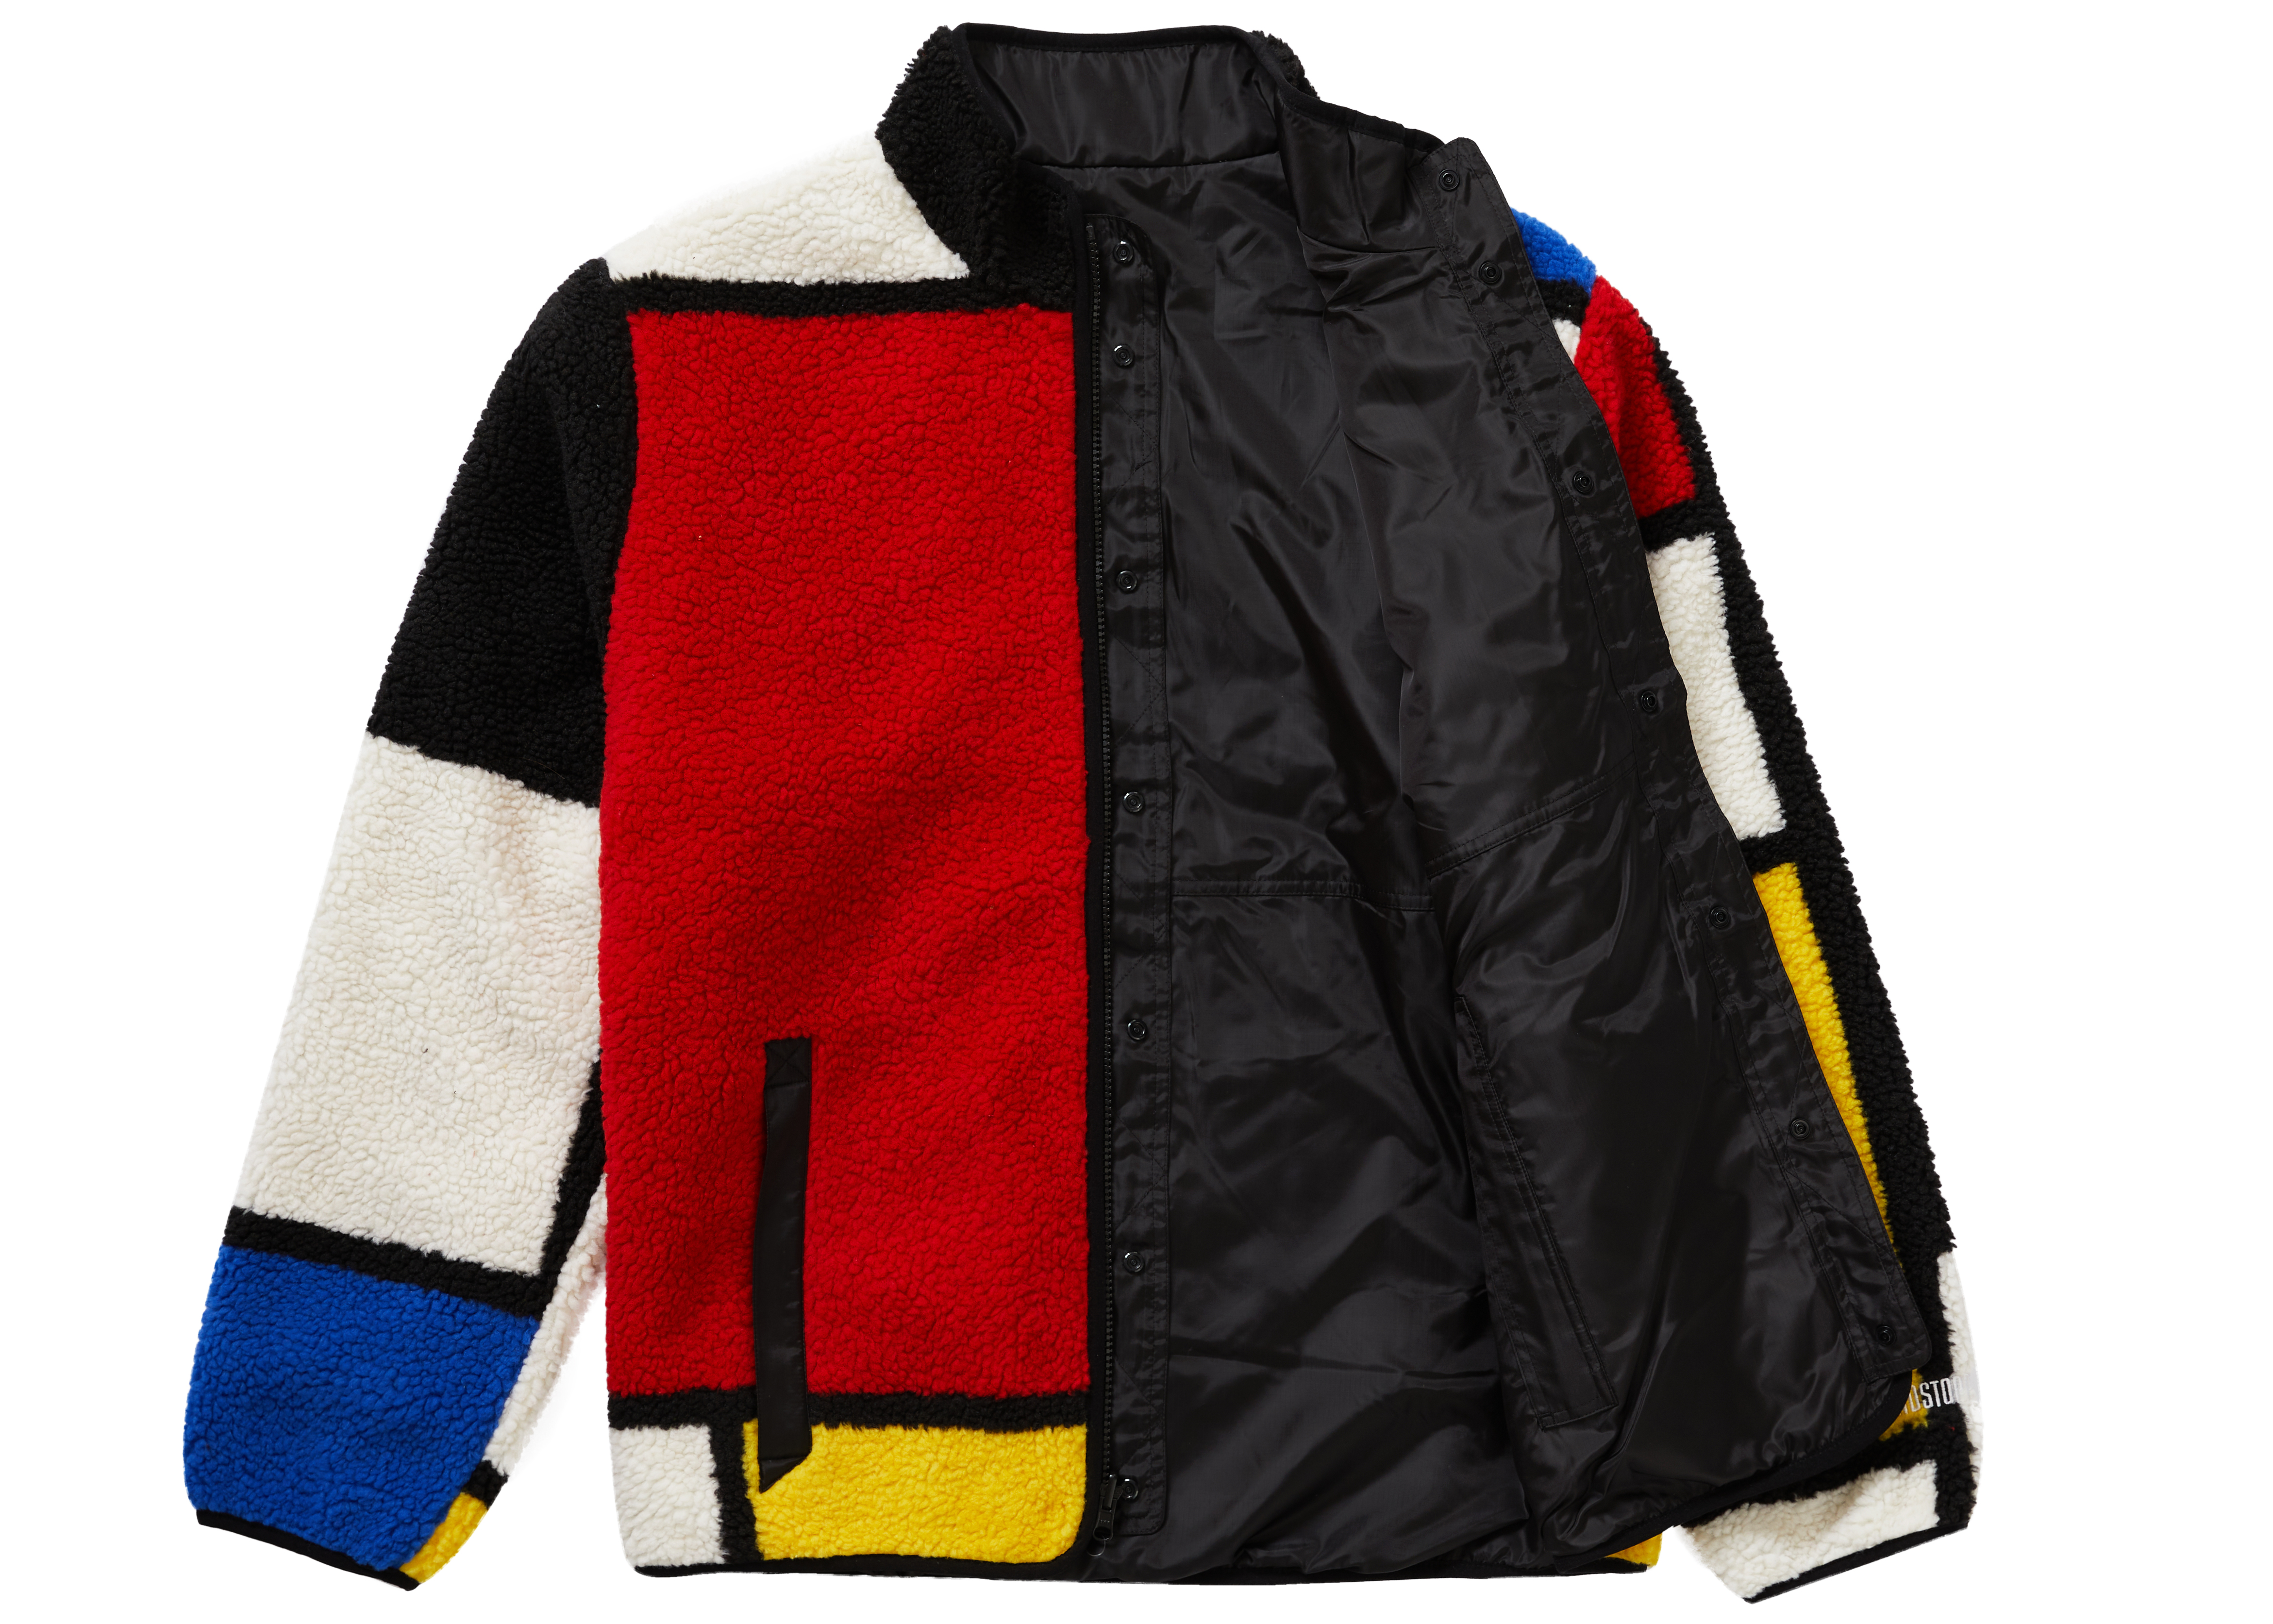 Supreme Reversible Colorblocked Fleece Jacket Red